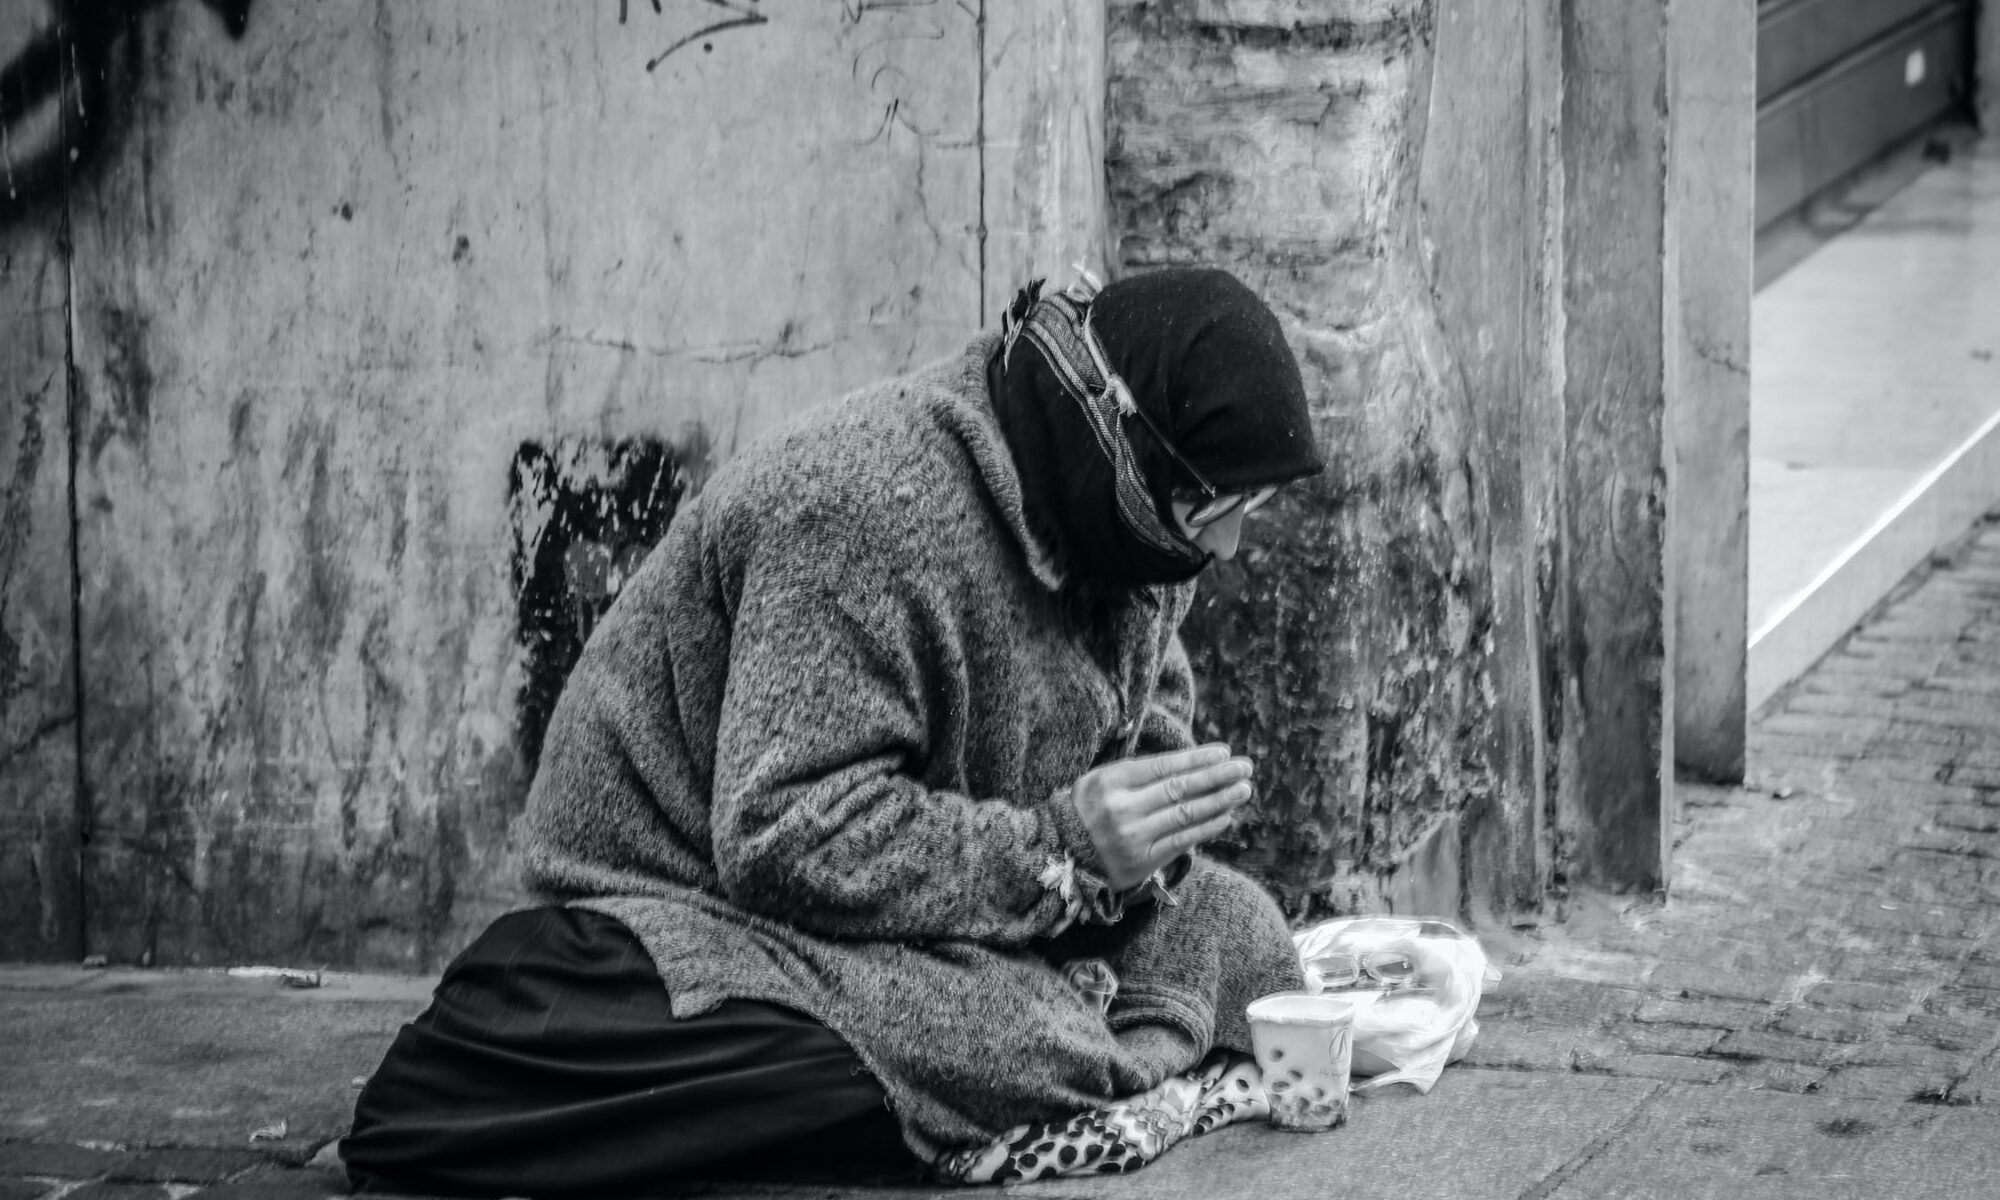 Destitute man on the street